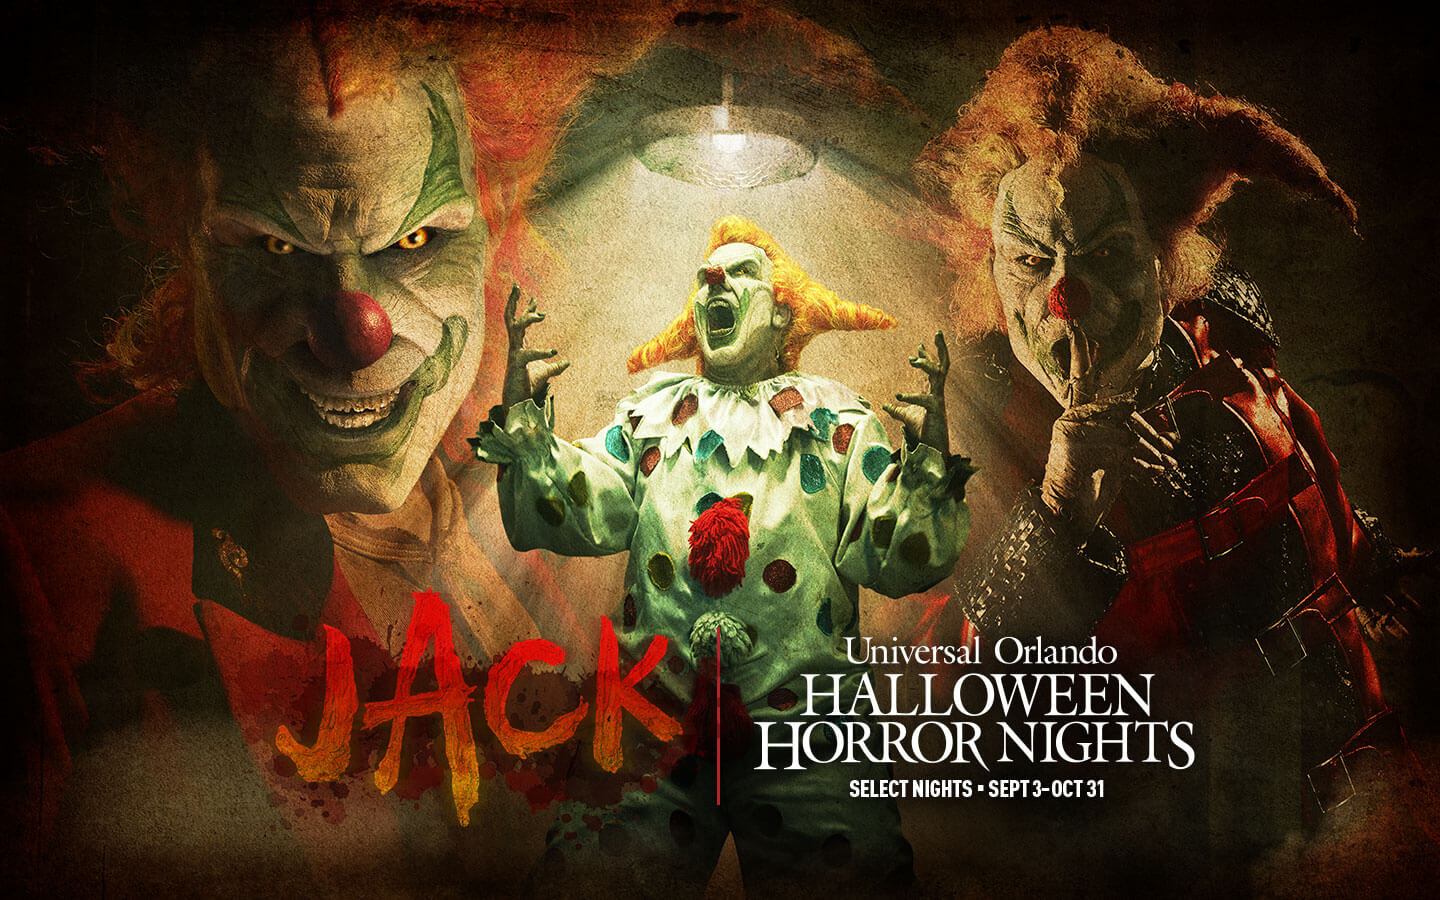 Jack the Clown returns for Halloween Horror Nights 30 Inside Universal